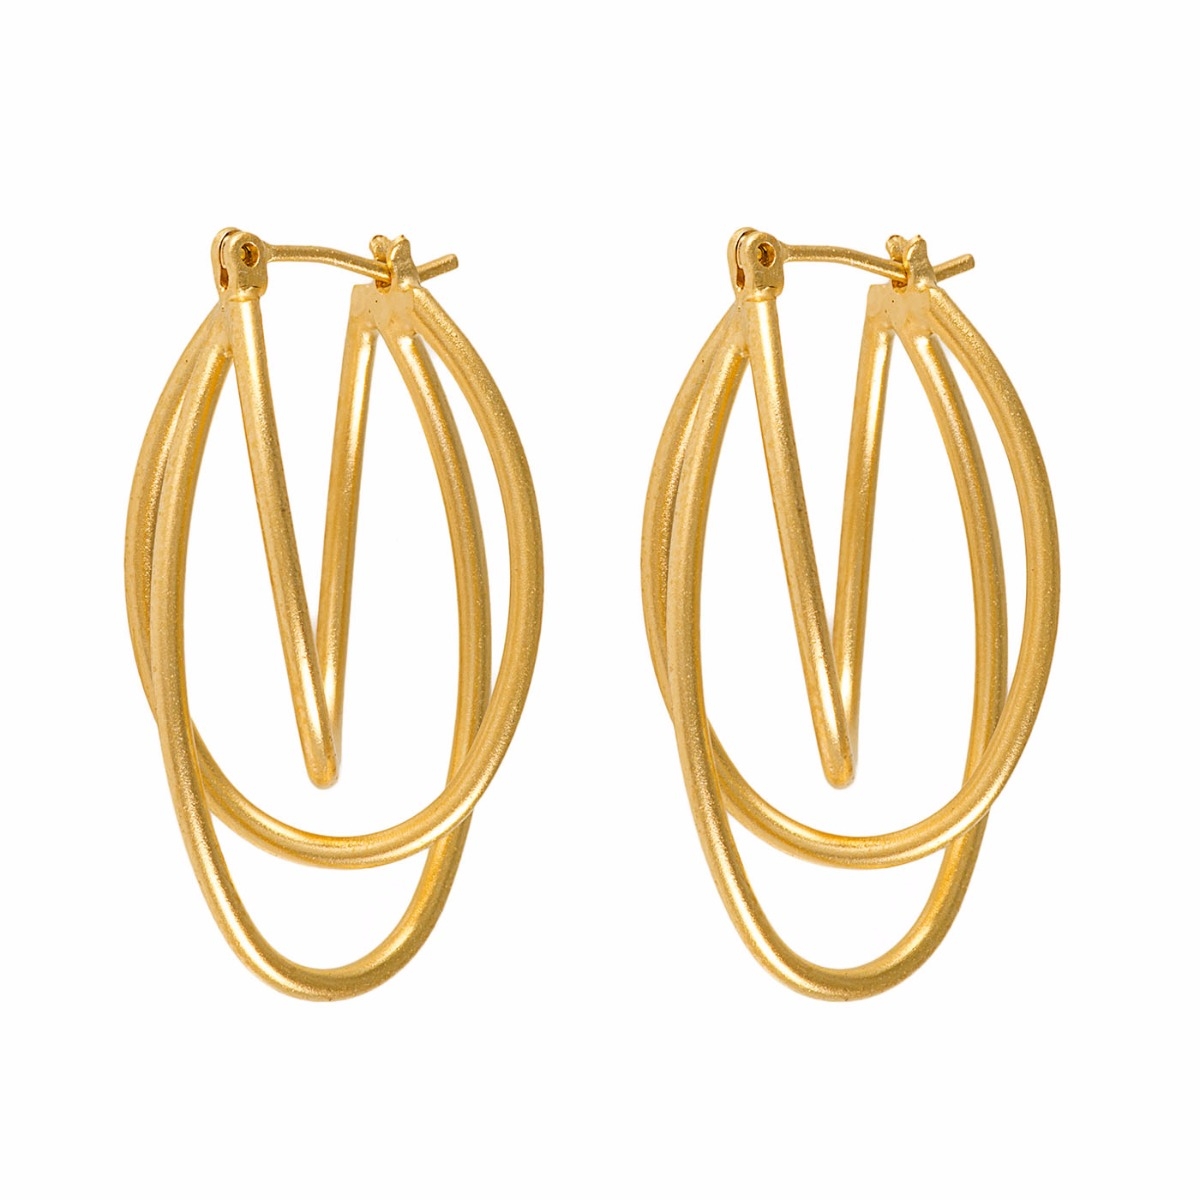 Hagar Satat 24K Gold Plated Multi-directional Triple Hooped Earrings - 1